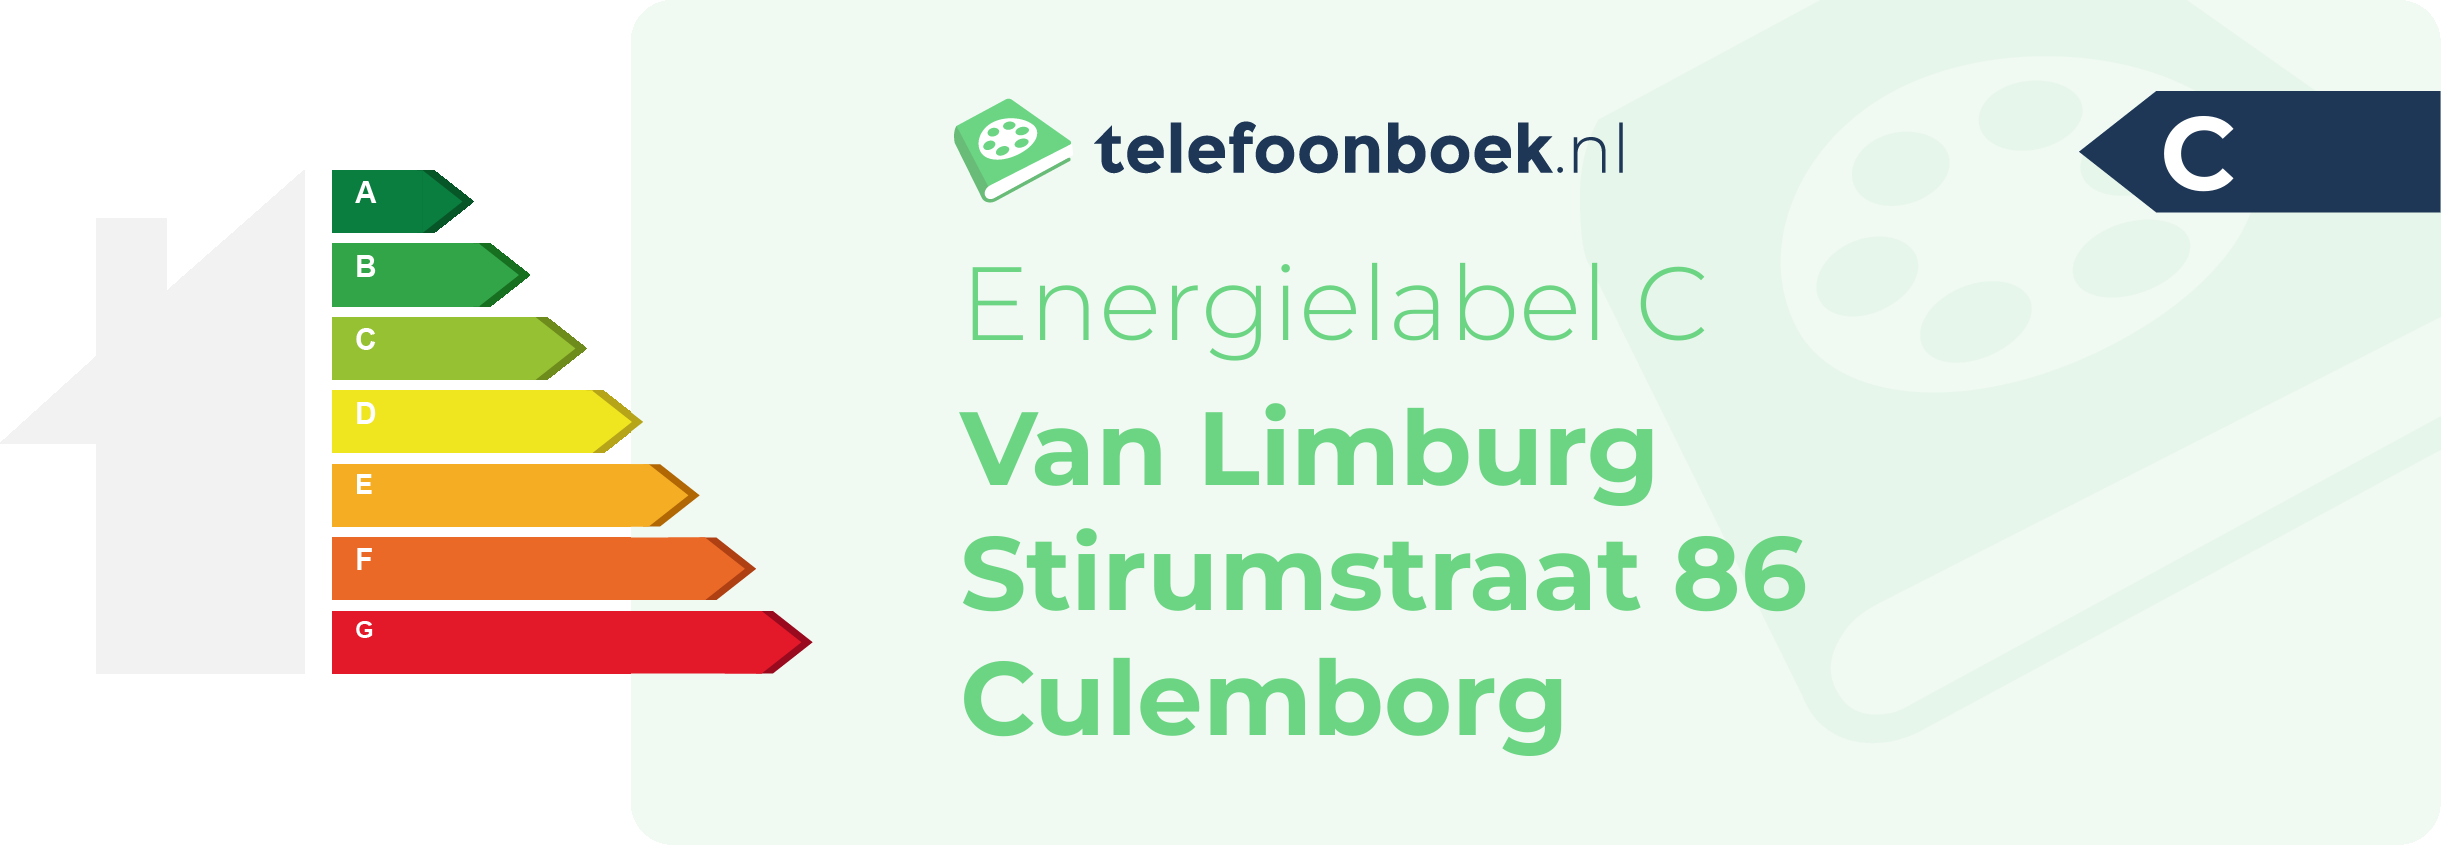 Energielabel Van Limburg Stirumstraat 86 Culemborg